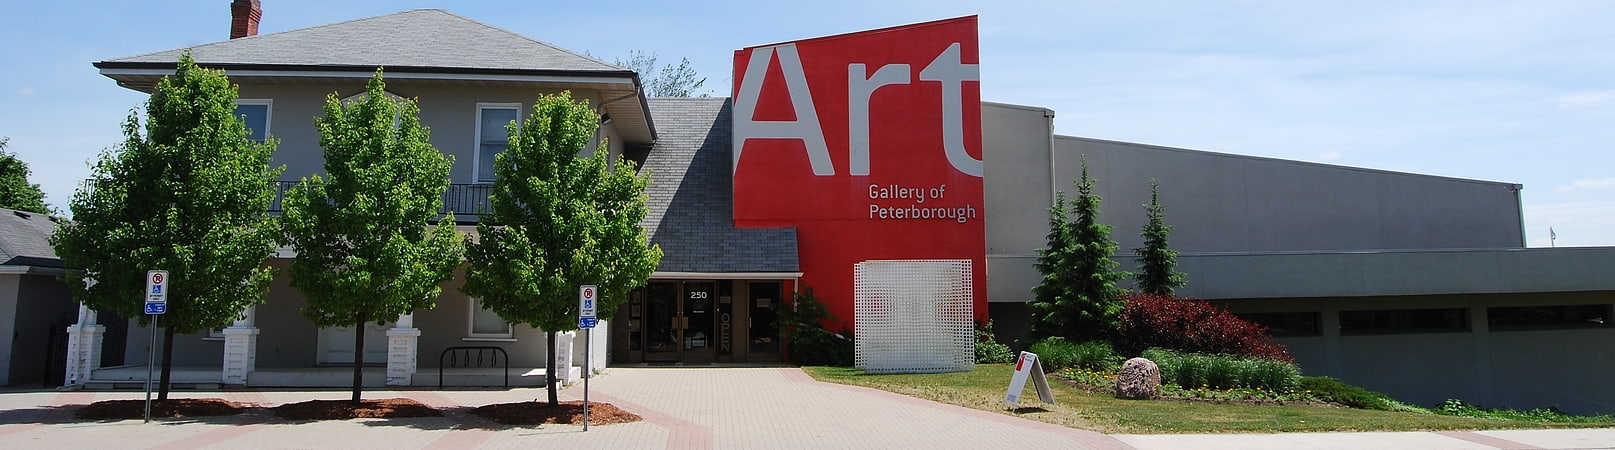 Art gallery in Peterborough, Ontario